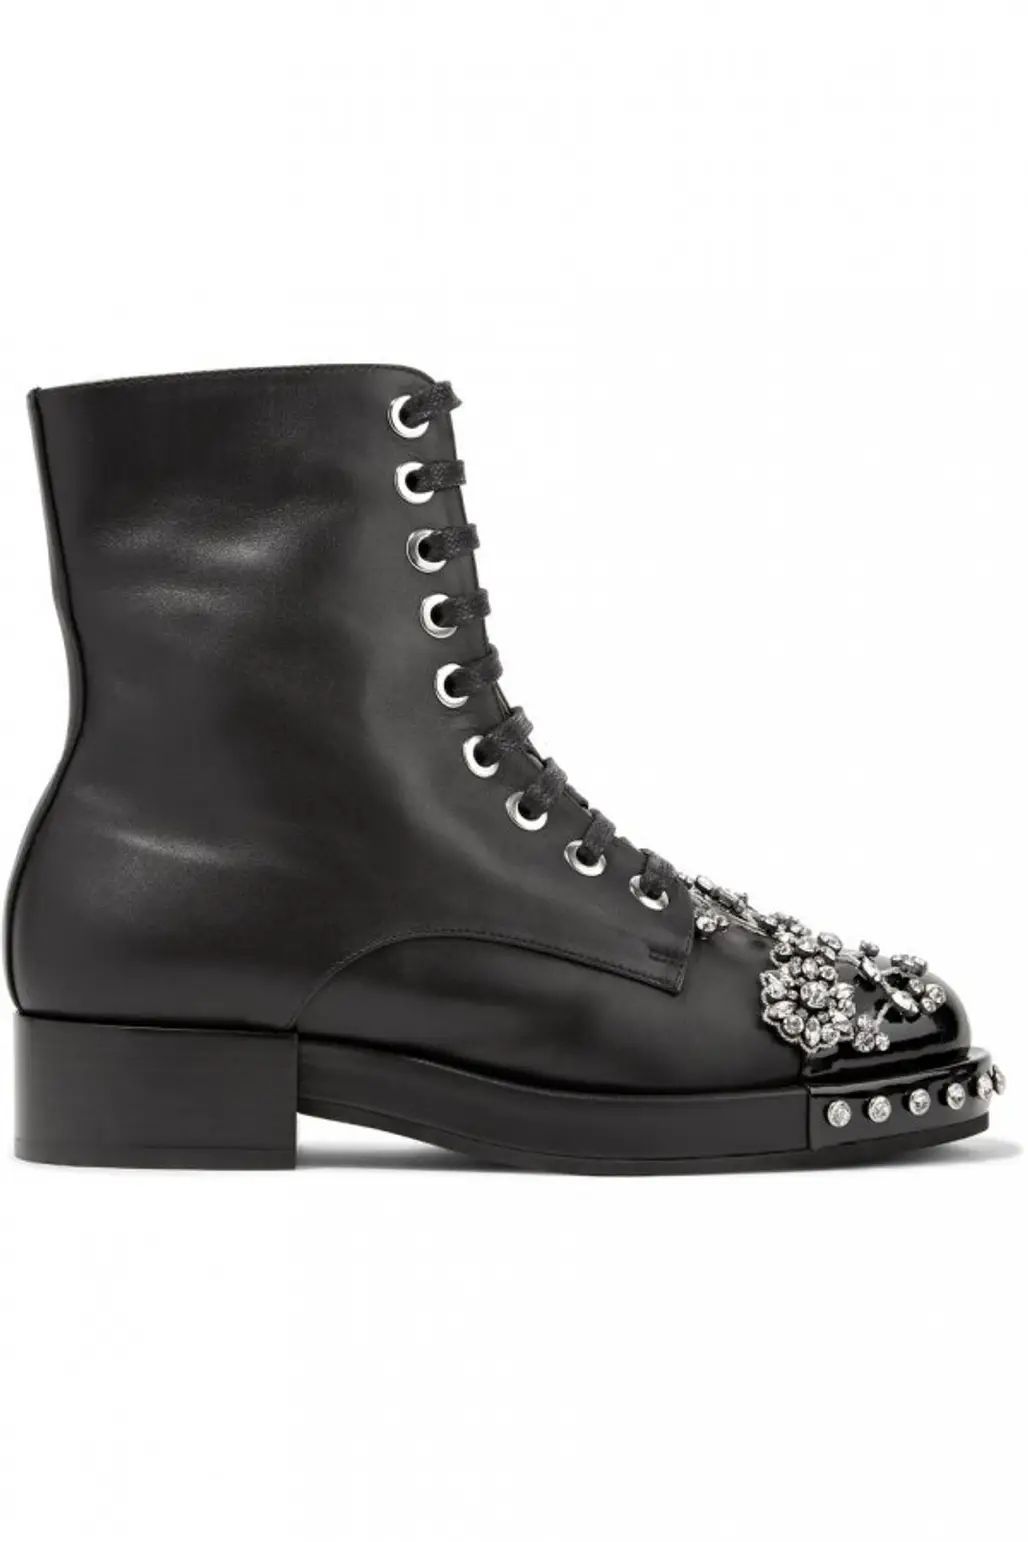 footwear, black, boot, shoe, fashion,